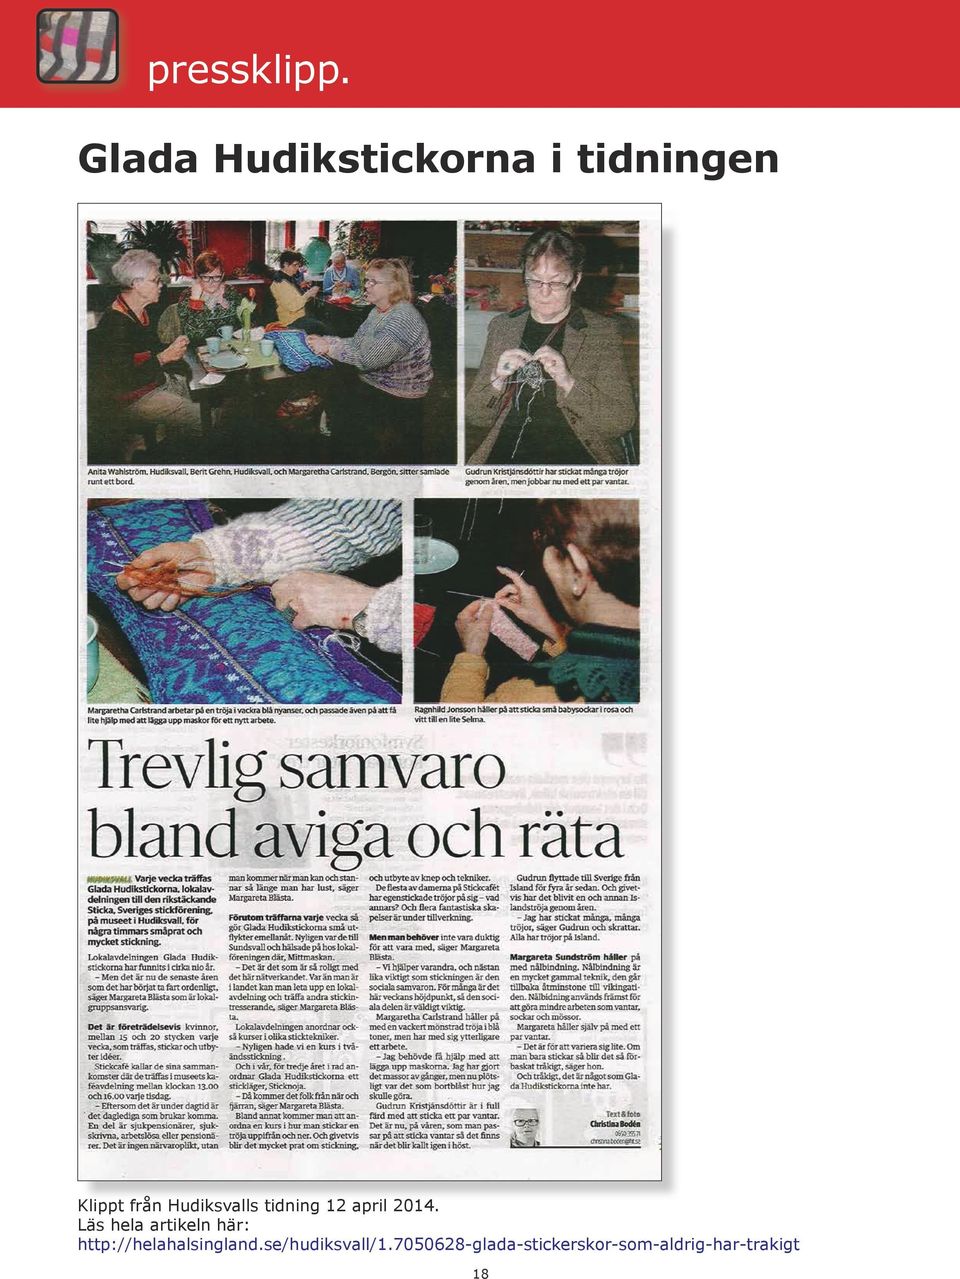 Hudiksvalls tidning 12 april 2014.